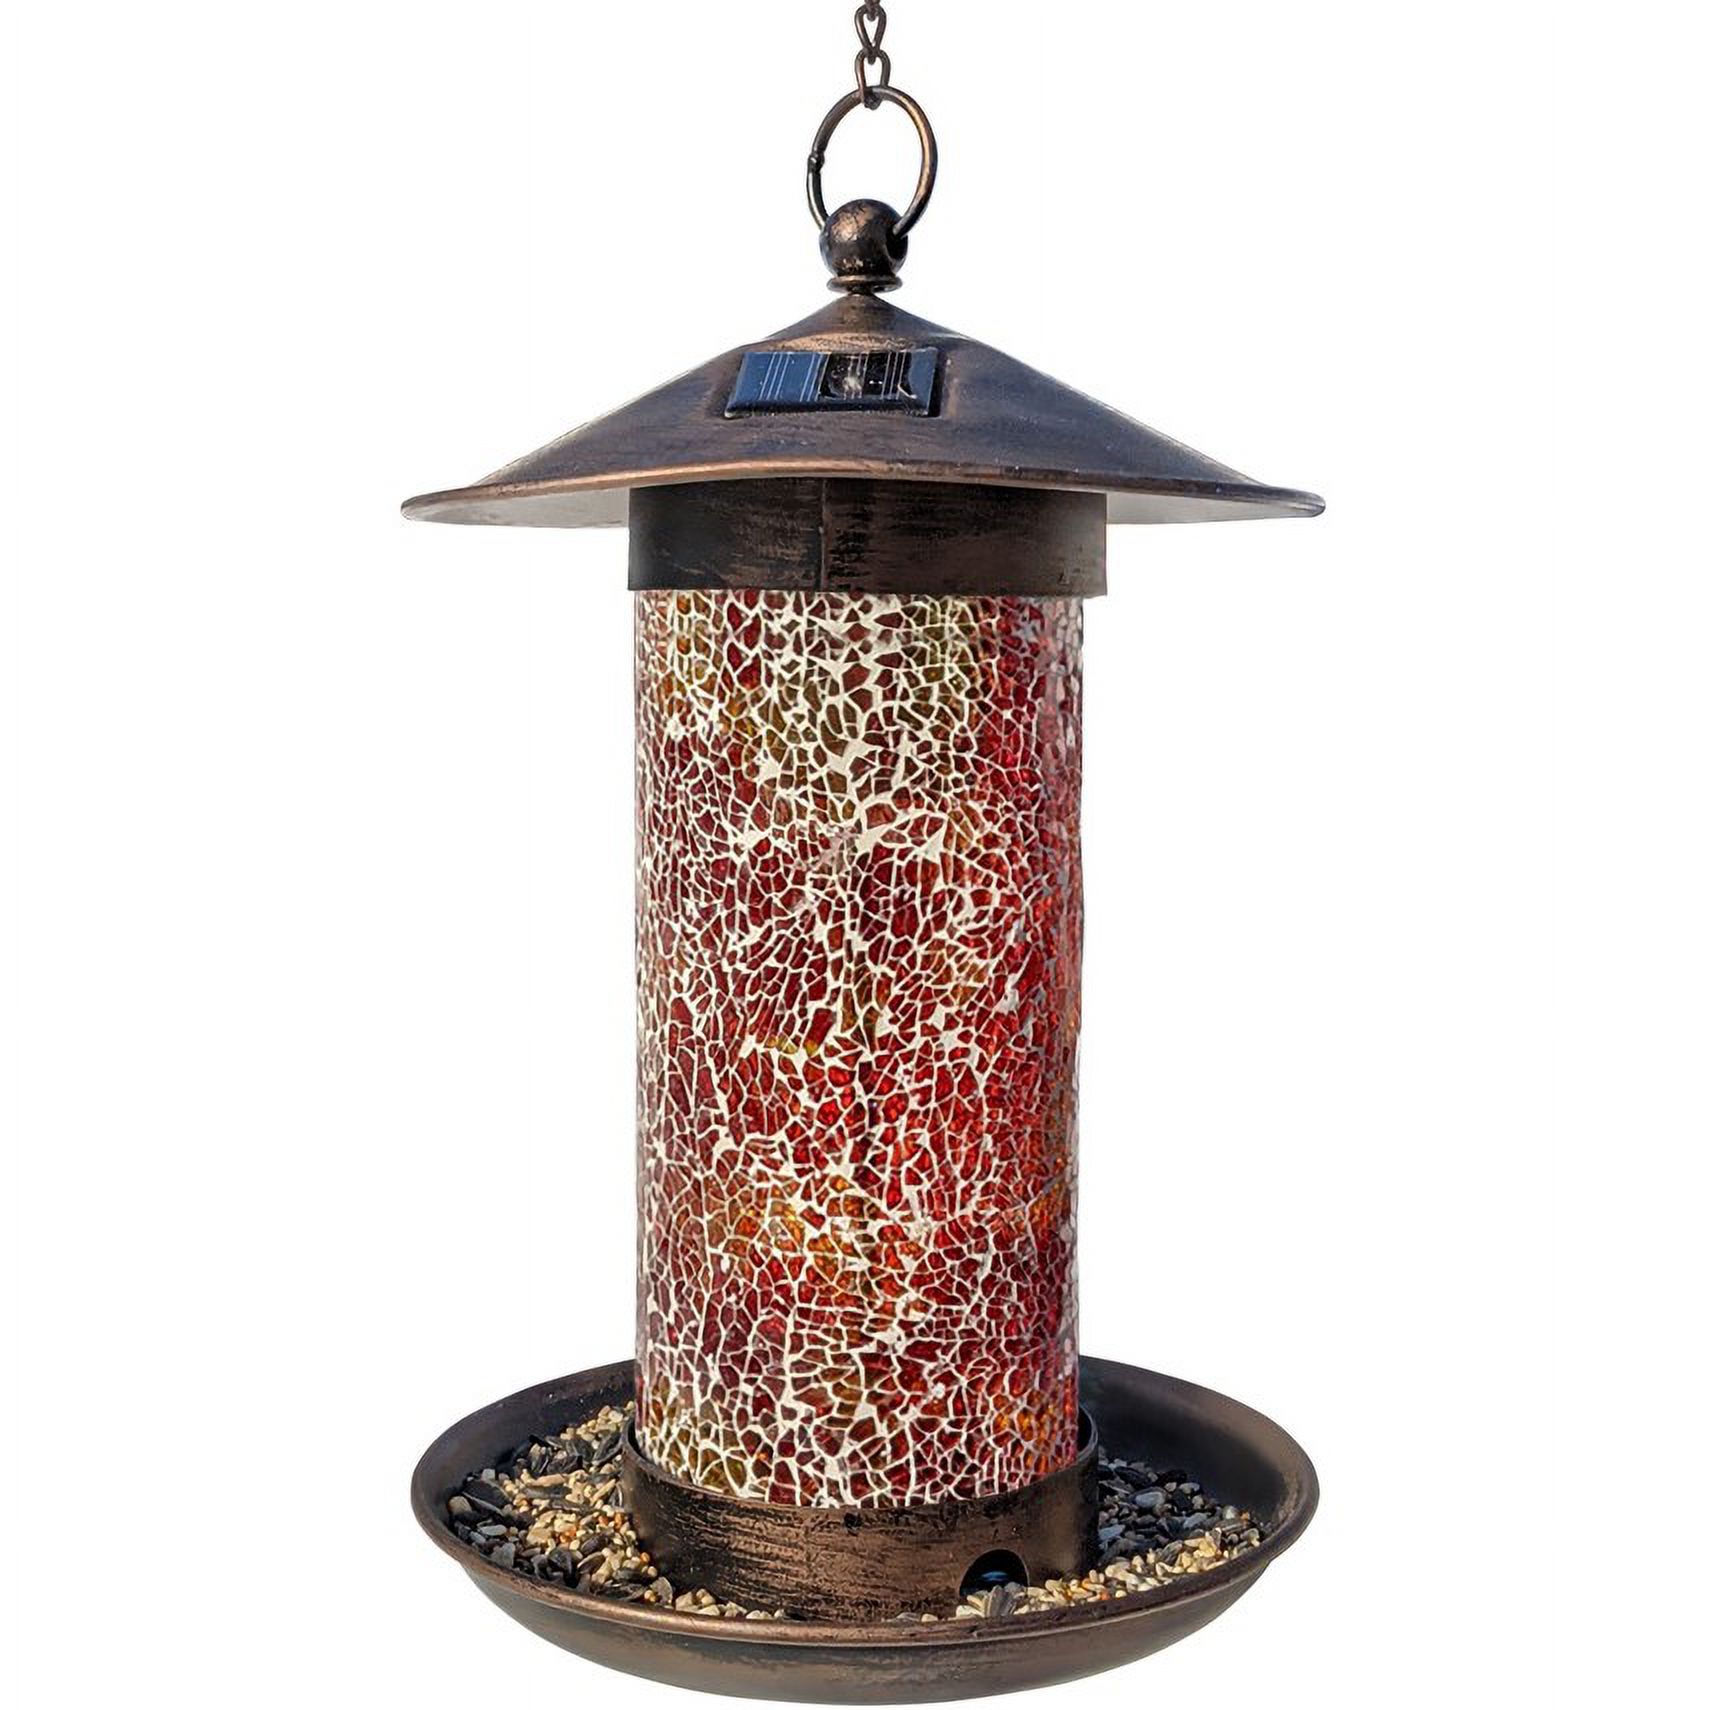 Glass Mosaic Wild Birdfeeder, Copper Roof Tube Bird Feeder - Solar Powered Garden Lantern, Solar Bird-Feeder for Outside Hanging Outdoor - image 1 of 8